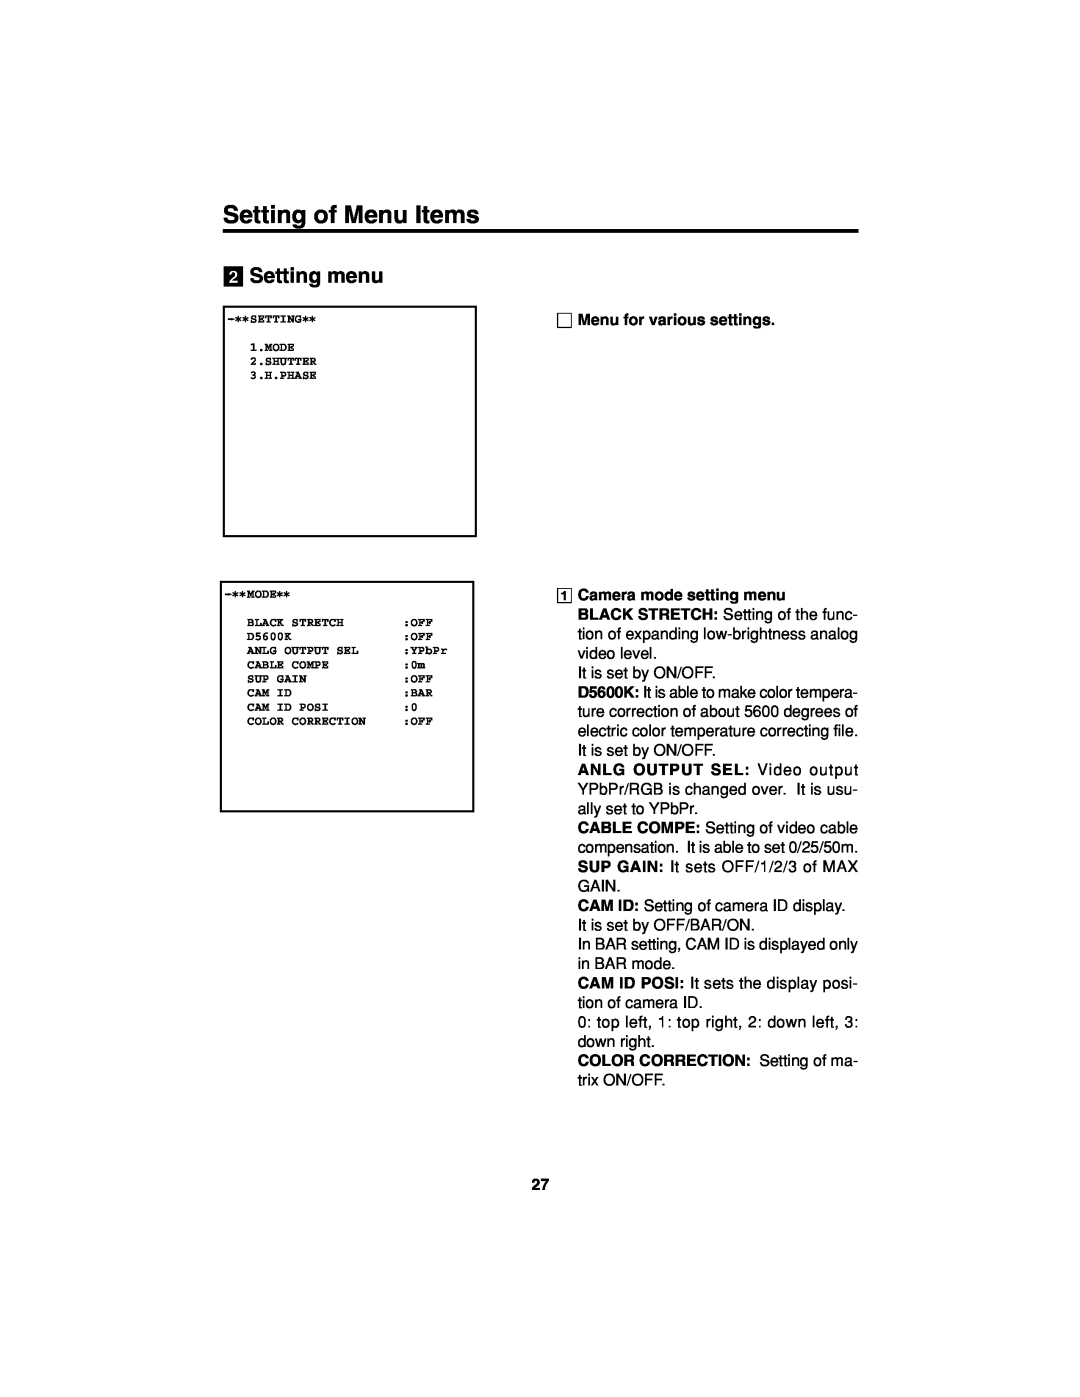 Panasonic AK-HC900 manual @ Setting menu, Mode, Menu for various settings, COLOR CORRECTION Setting of ma- trix ON/OFF 